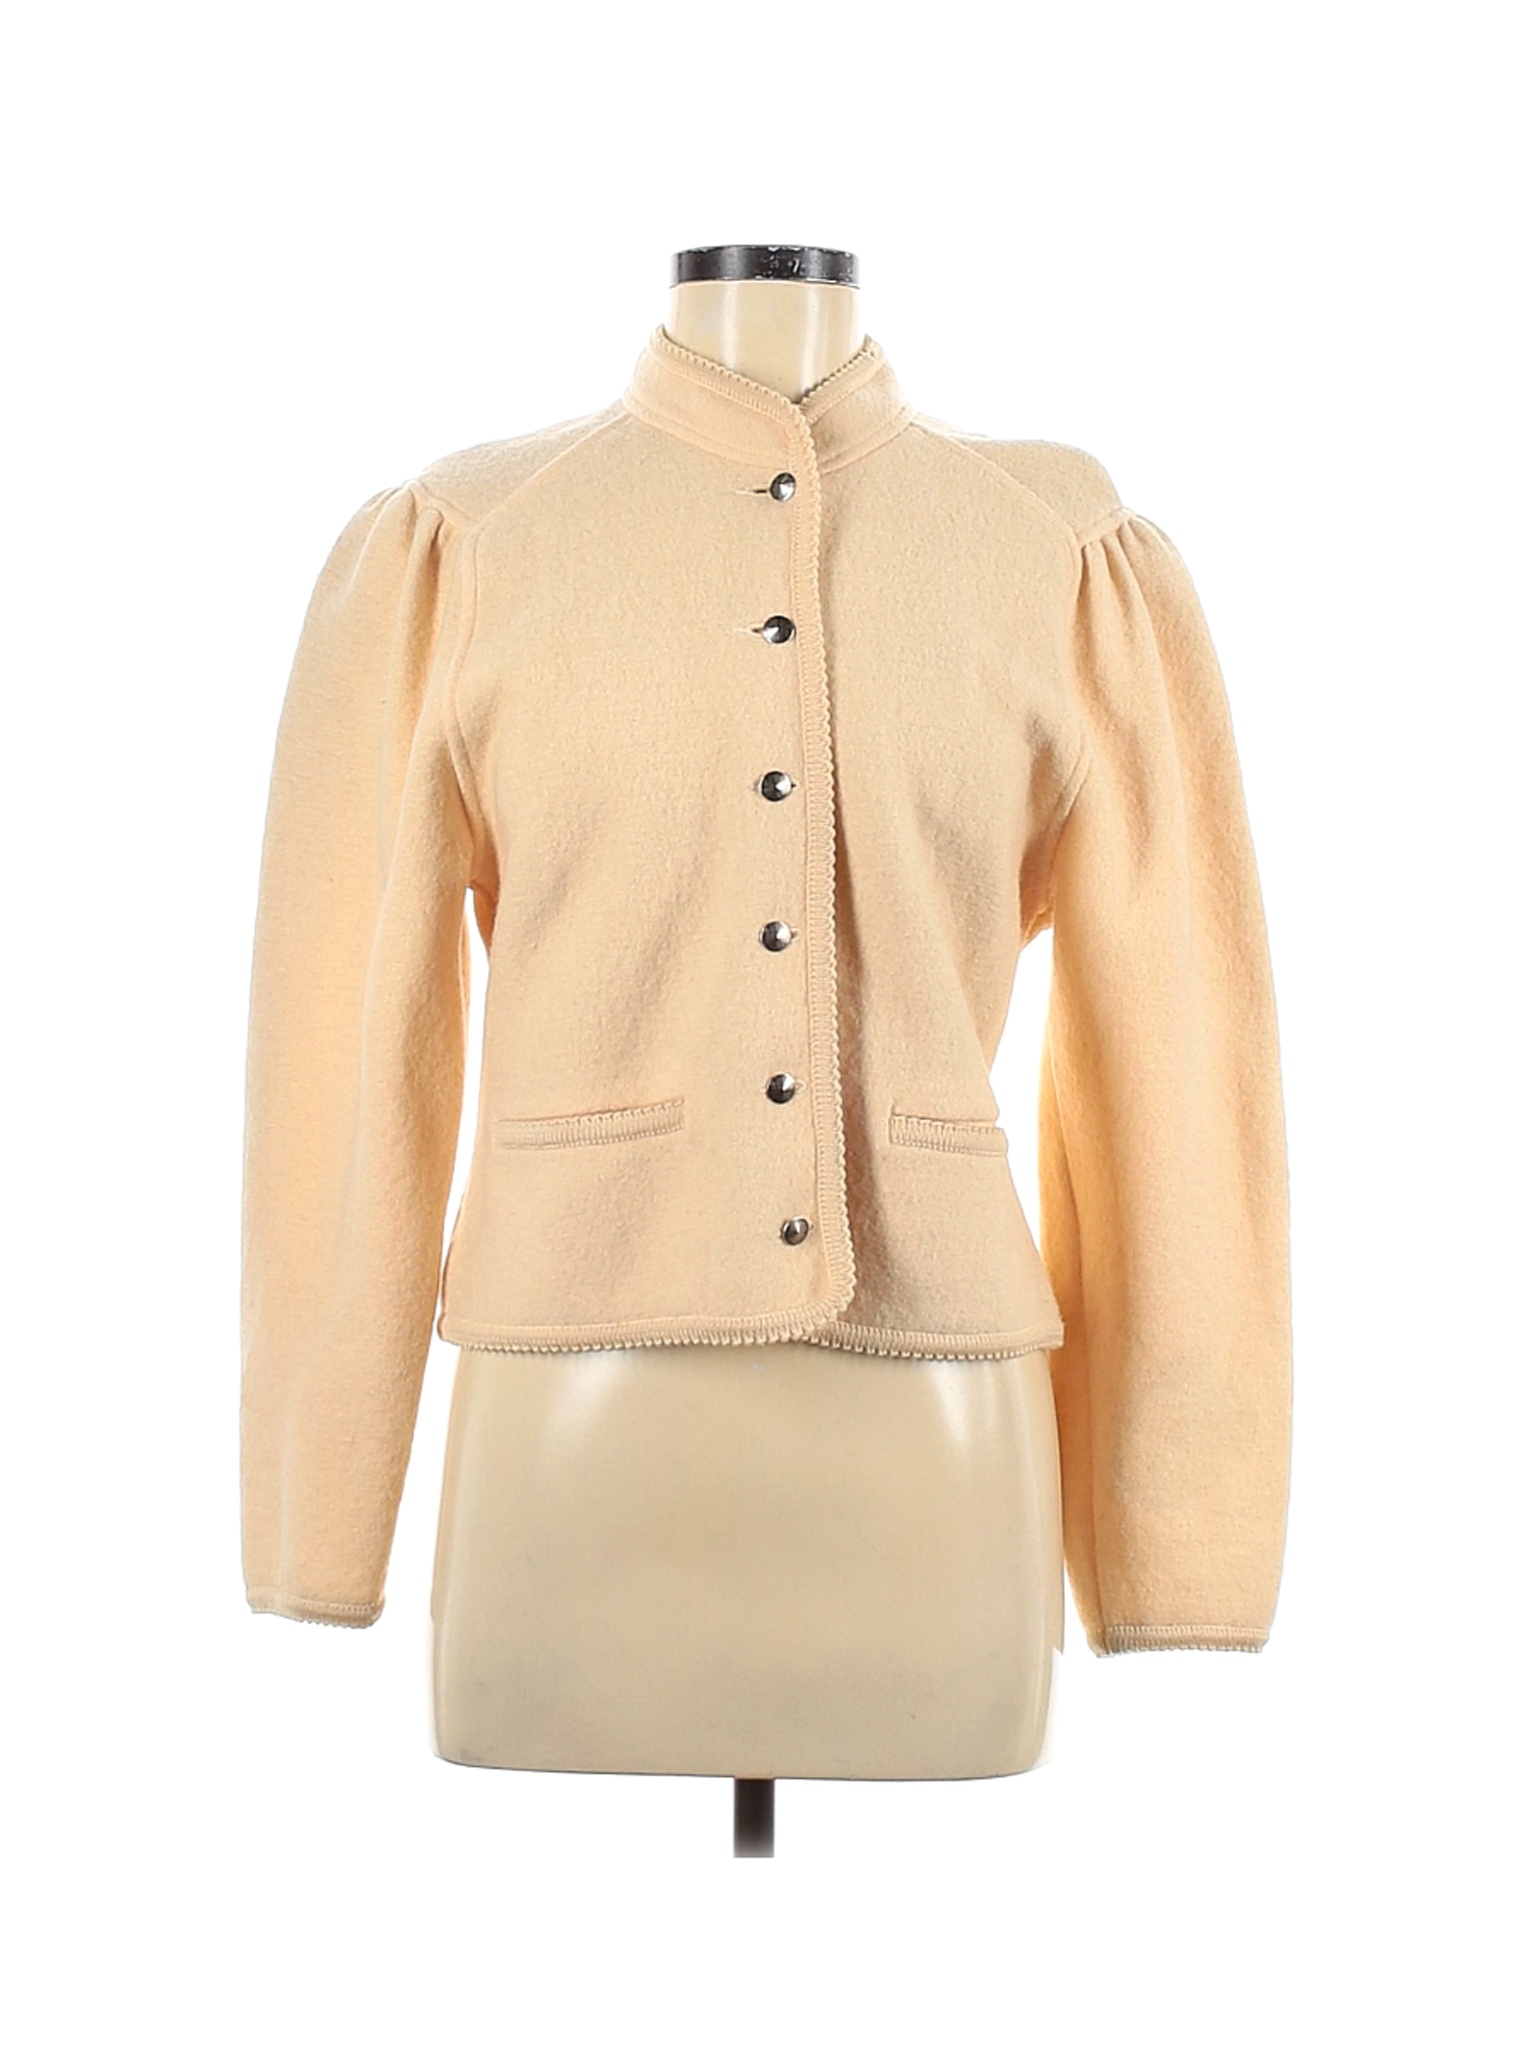 Geiger of Austria Women Brown Wool Coat 38 eur | eBay